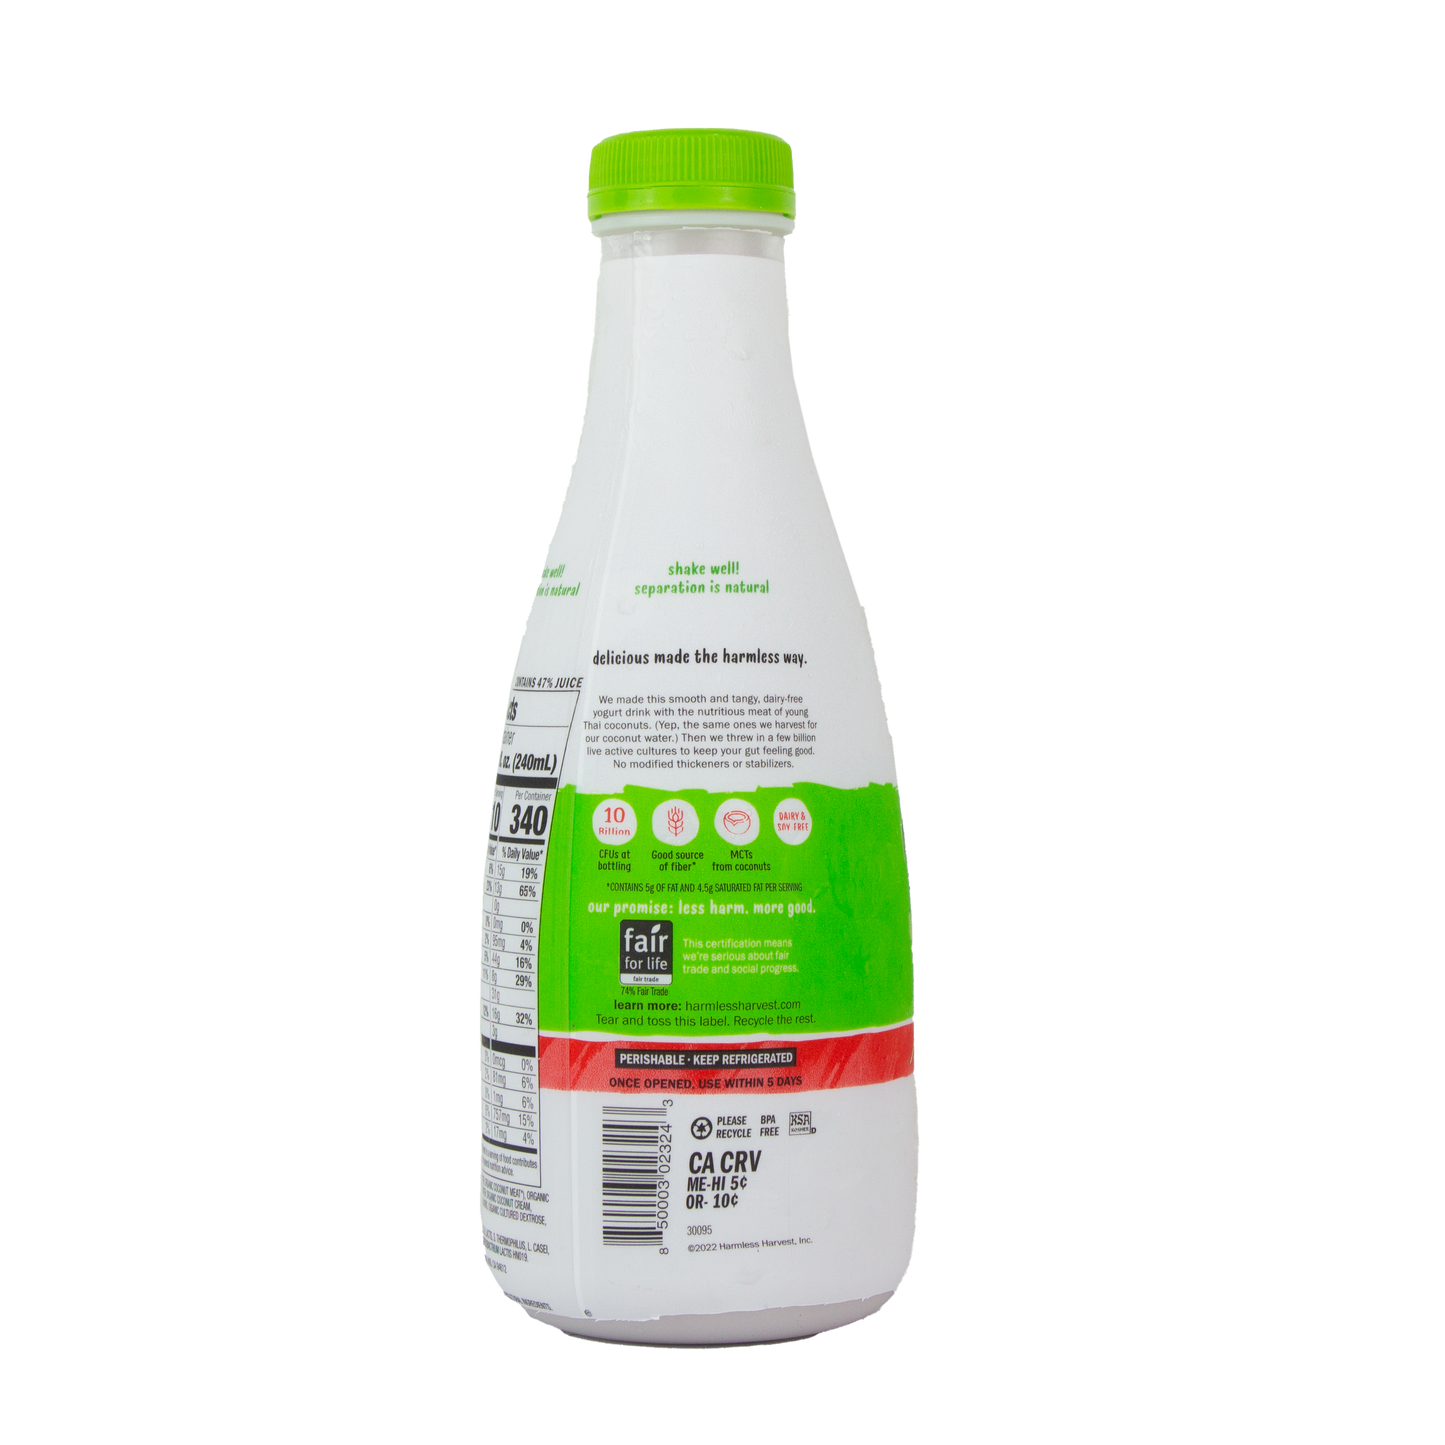 Harmless Harvest - Probiotic Dairy-Free Yogurt (Store Pick-Up Only)